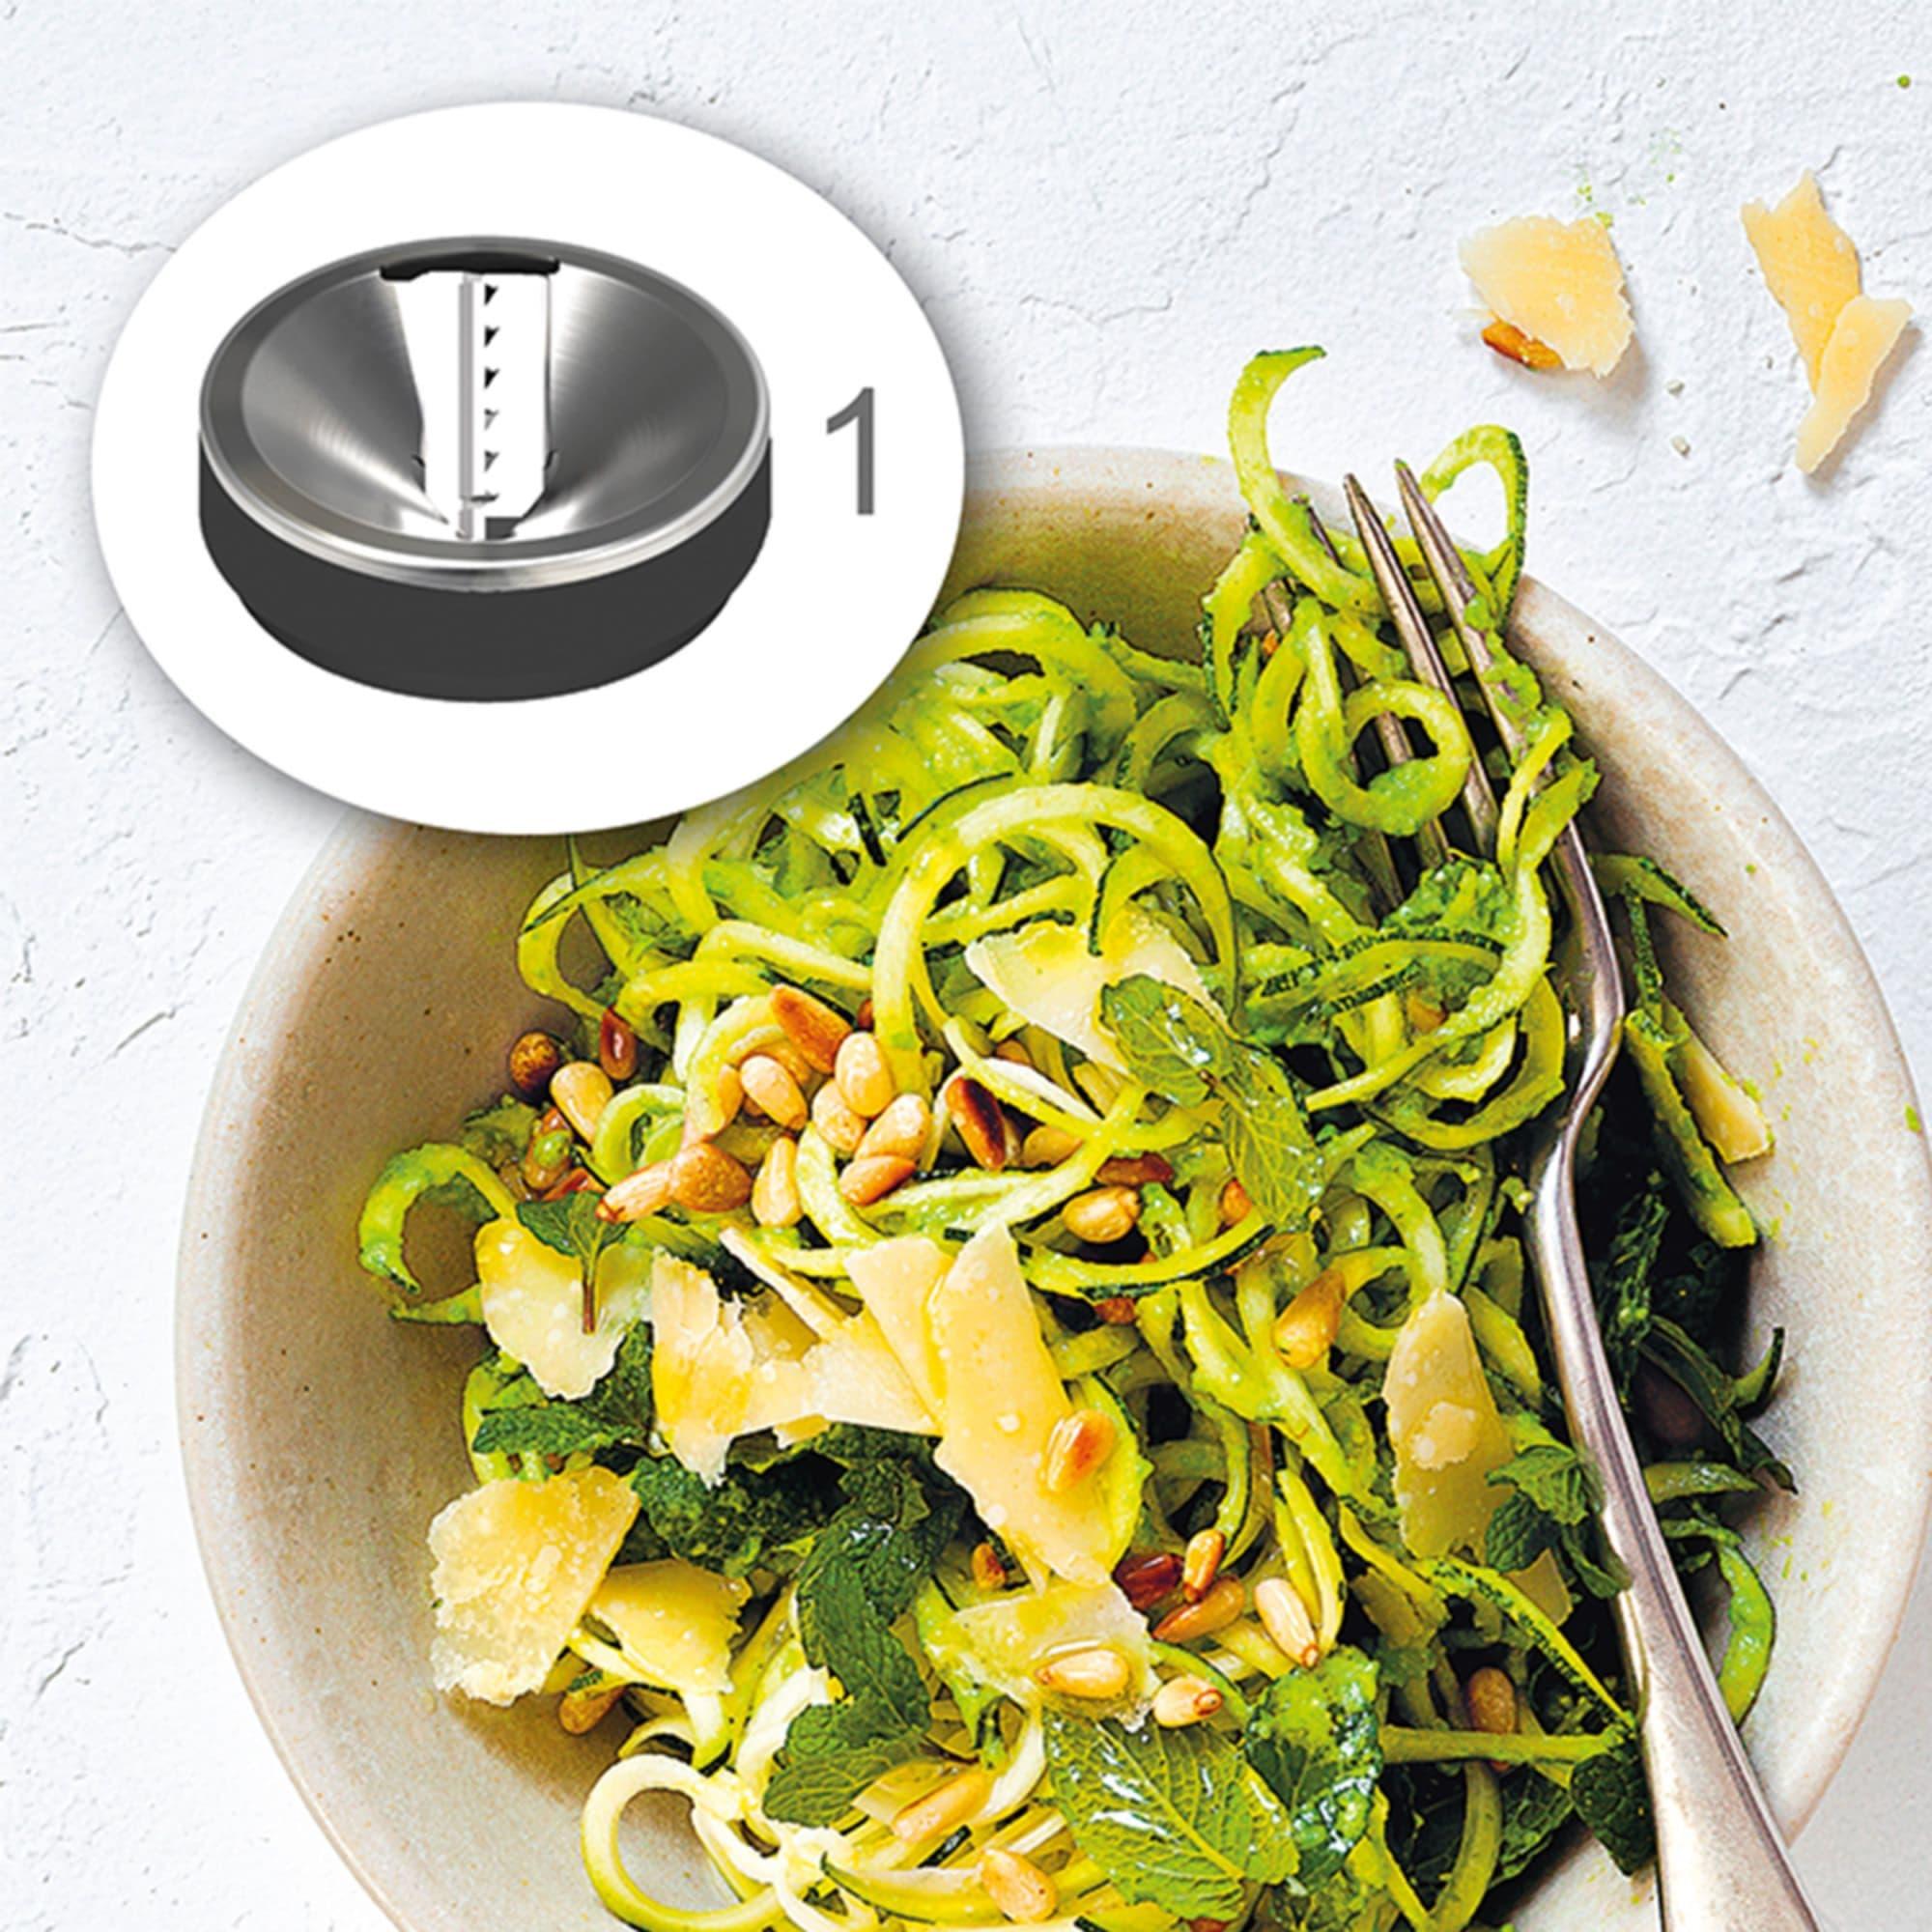 Magimix Salad and Spiraliser Kit for Juice Expert Image 9